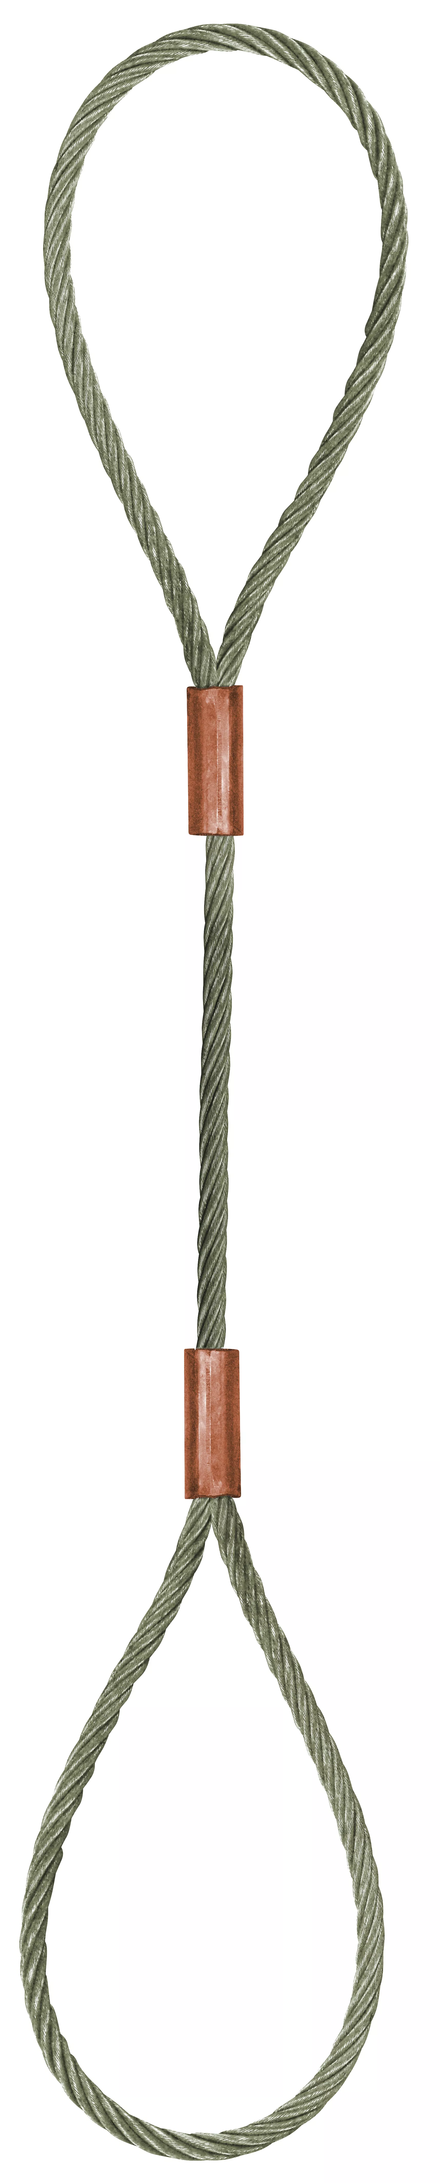 Élingue câble inox 2 grandes boucles d.14 mm cmu 2 t LEVAC - 4700KI